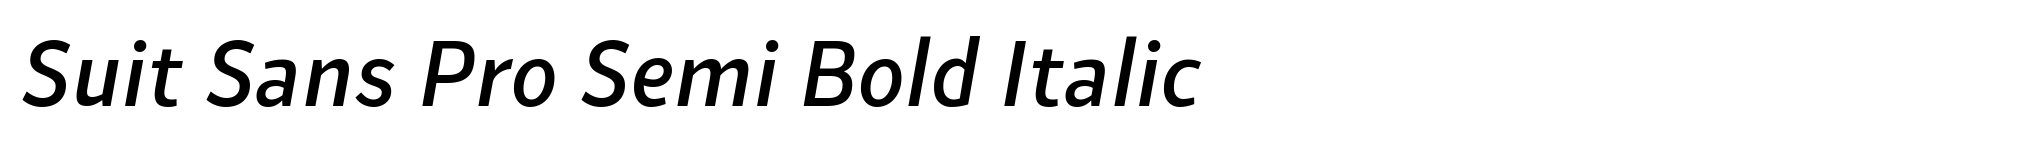 Suit Sans Pro Semi Bold Italic image